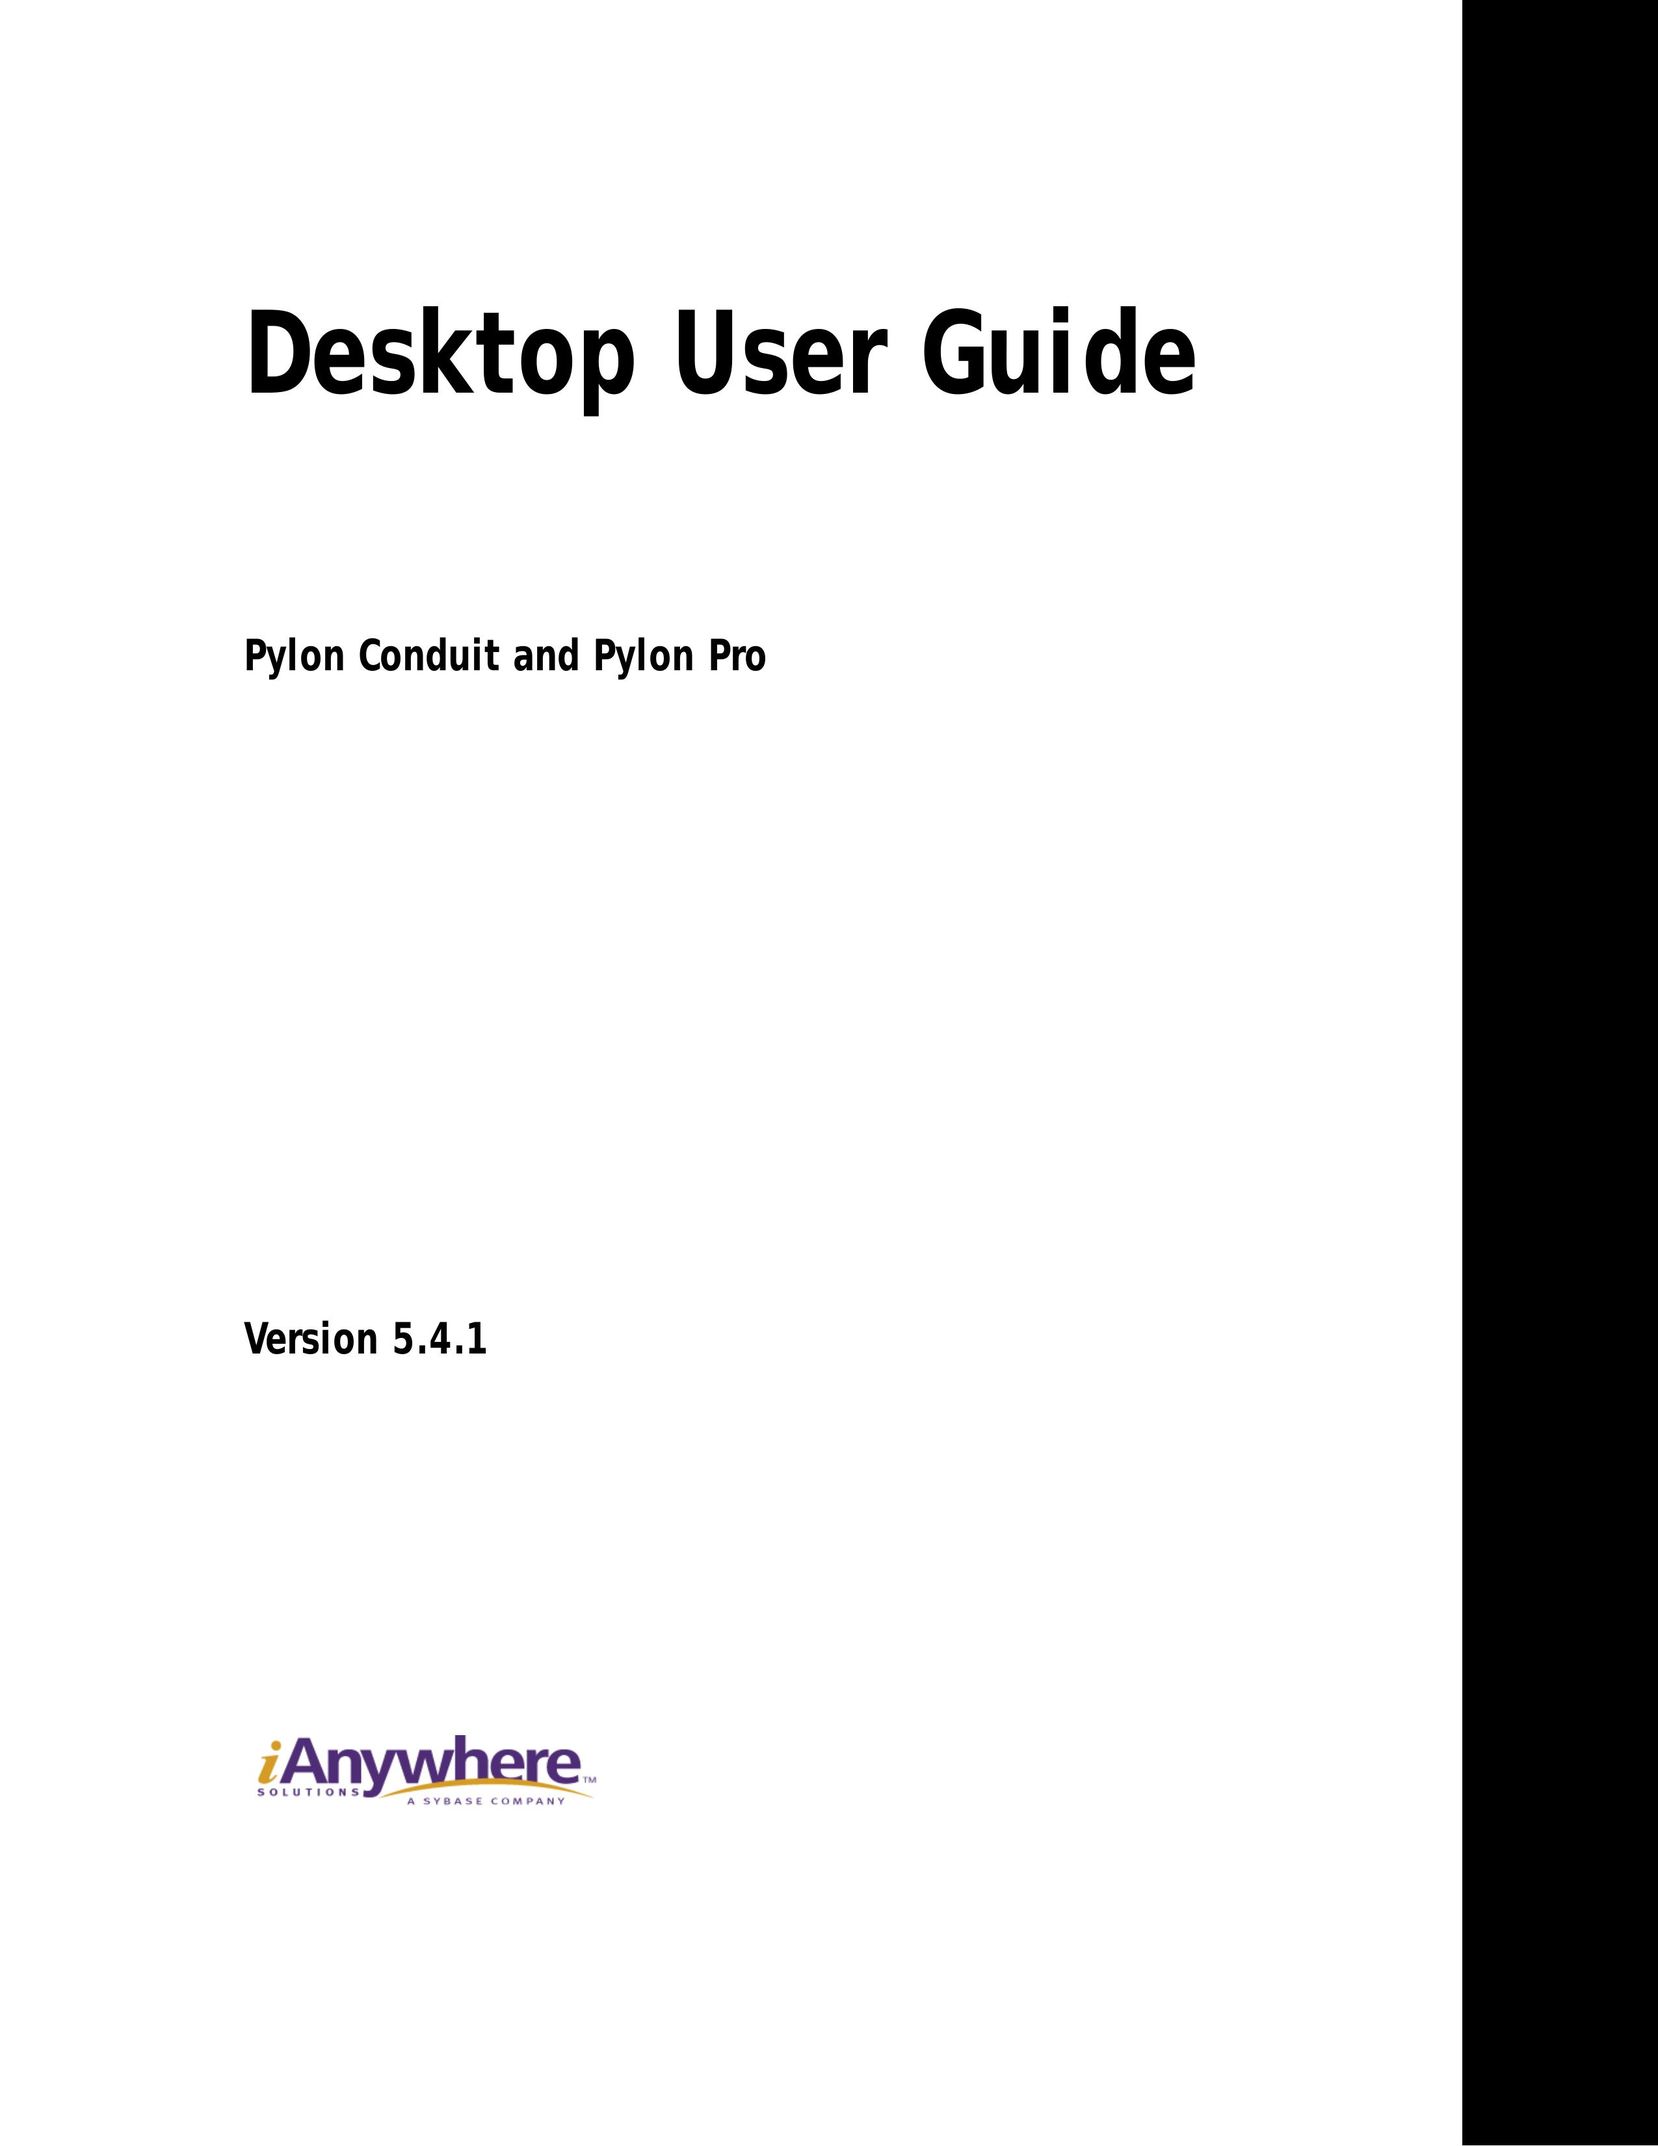 Sybase Desktop Personal Computer User Manual